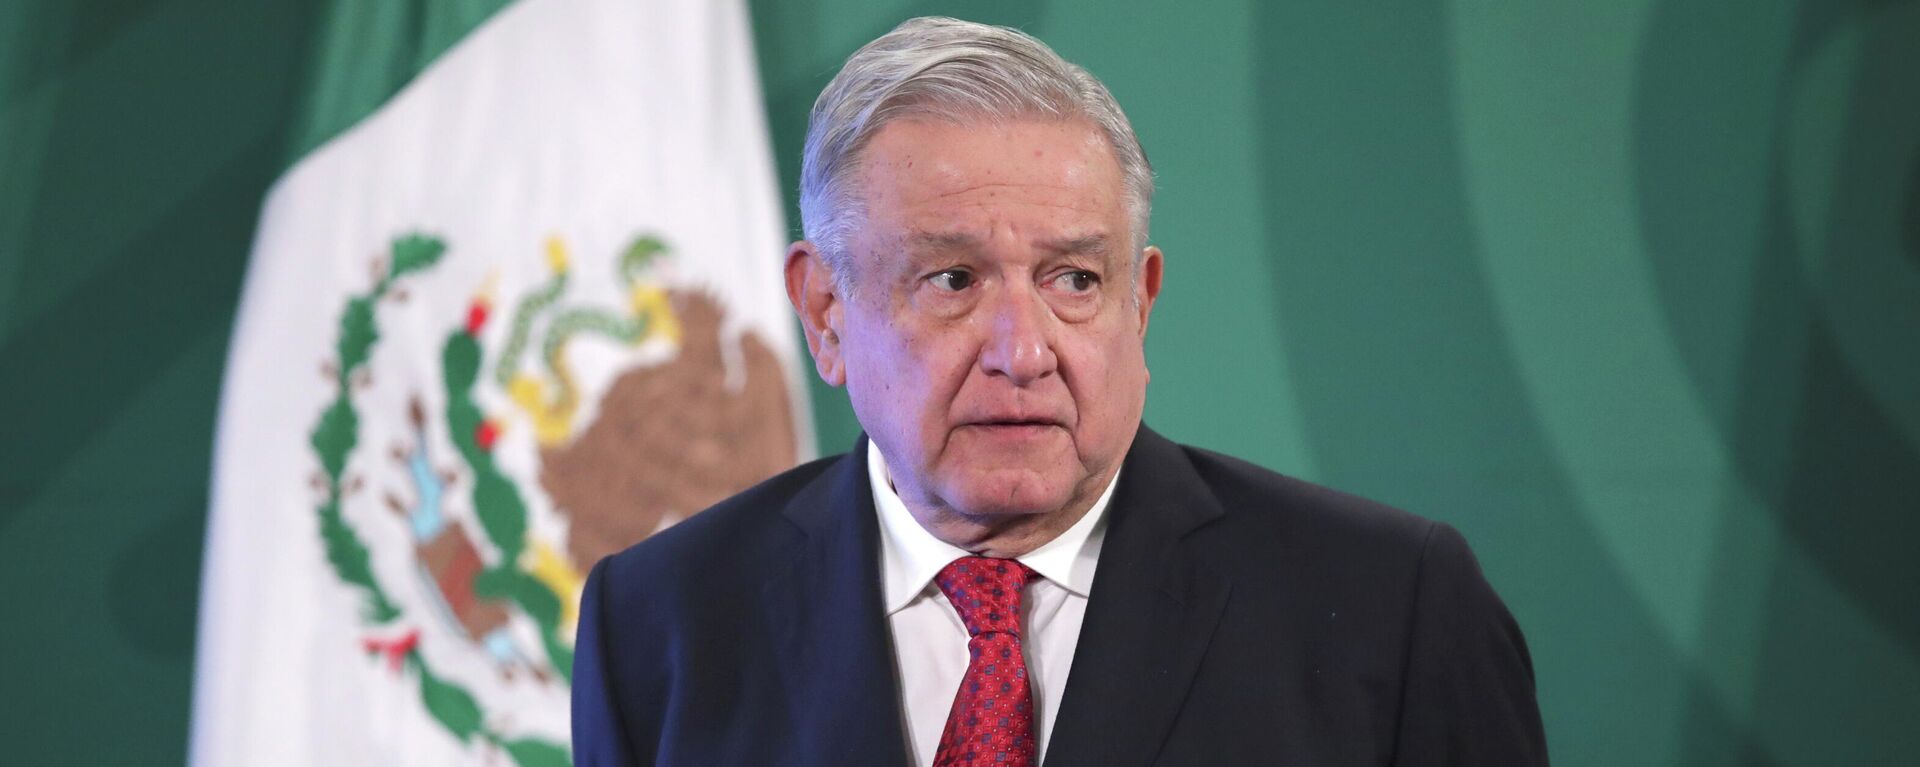 El presidente de México, Andrés Manuel López Obrador - Sputnik Mundo, 1920, 01.03.2021